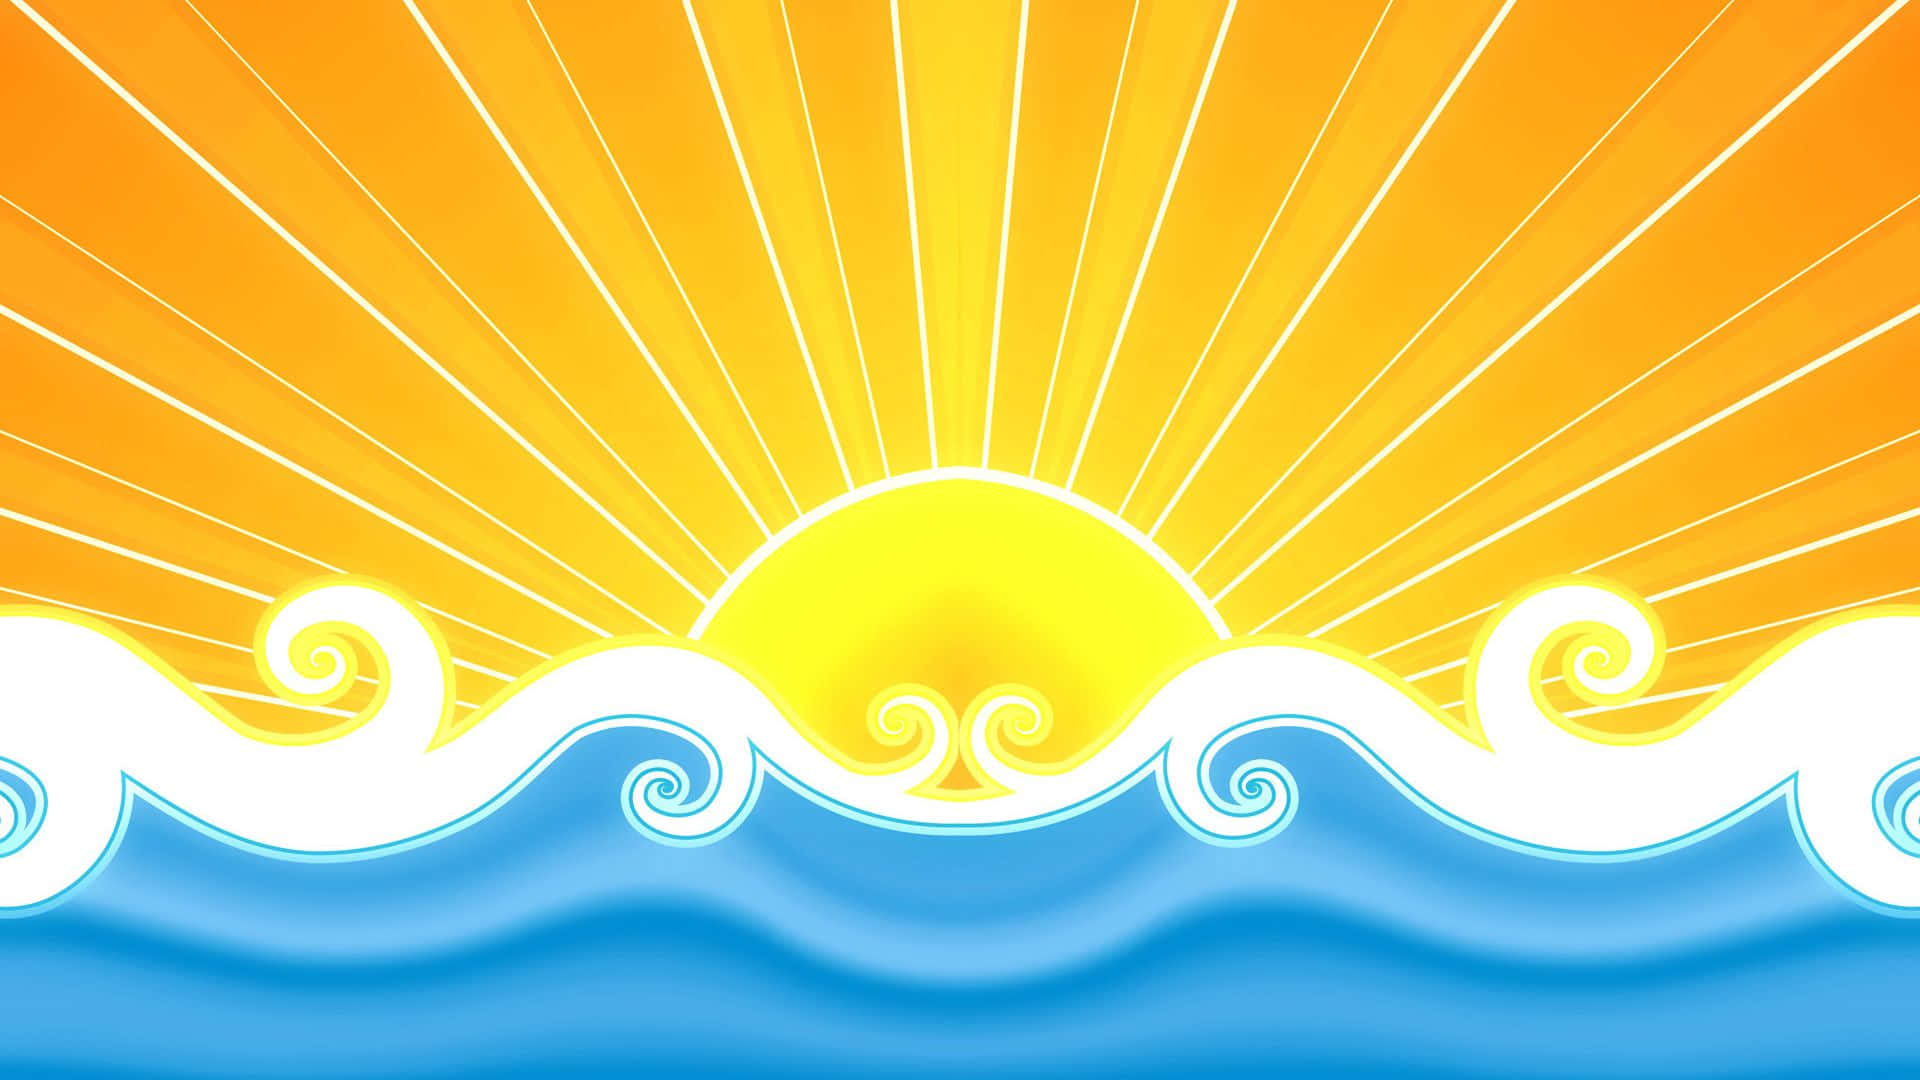 1920x1080 Summer Sun And Ocean Waves Background Design